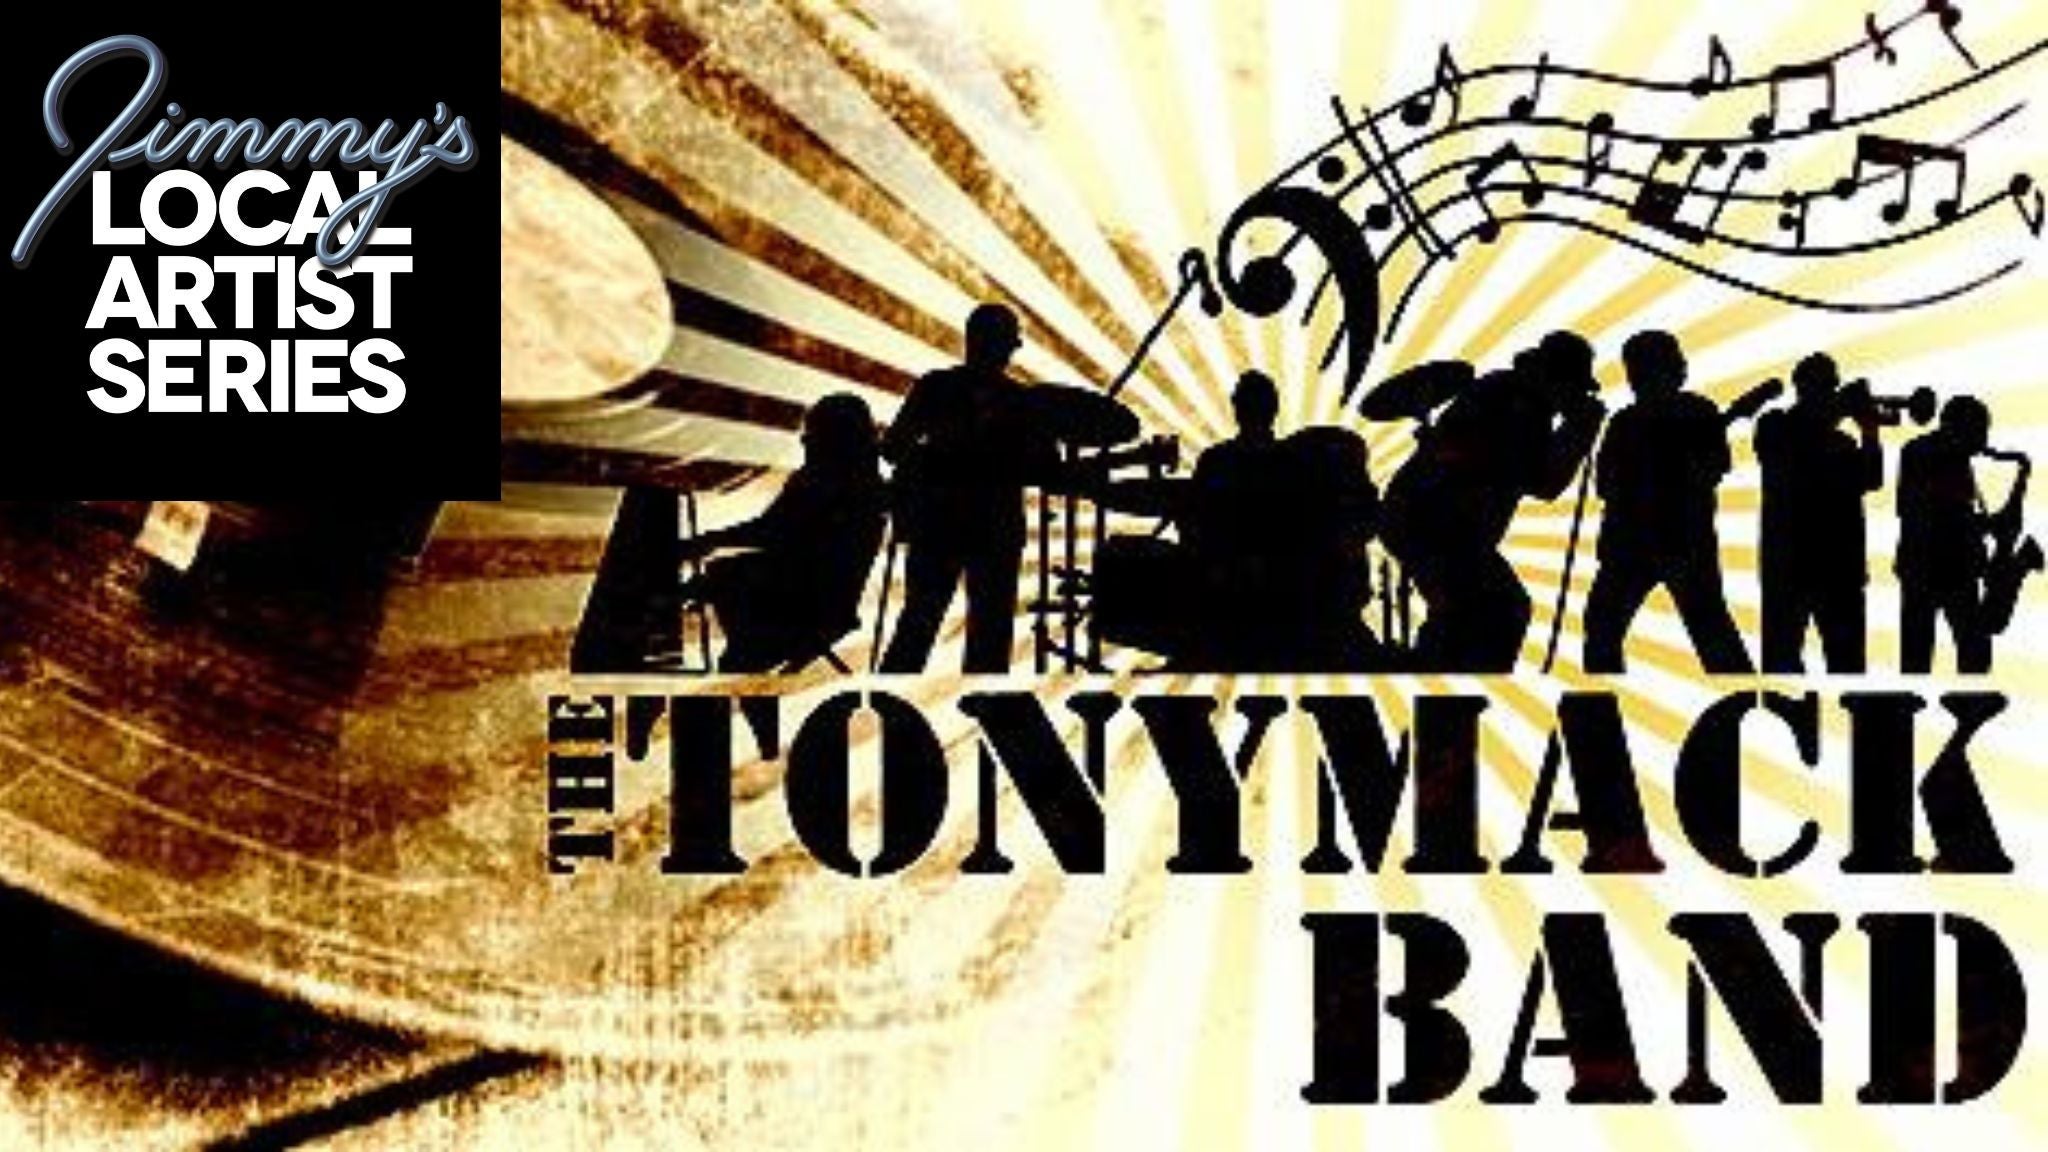 THE TONYMACK BAND – Monday Night Local Artist Series